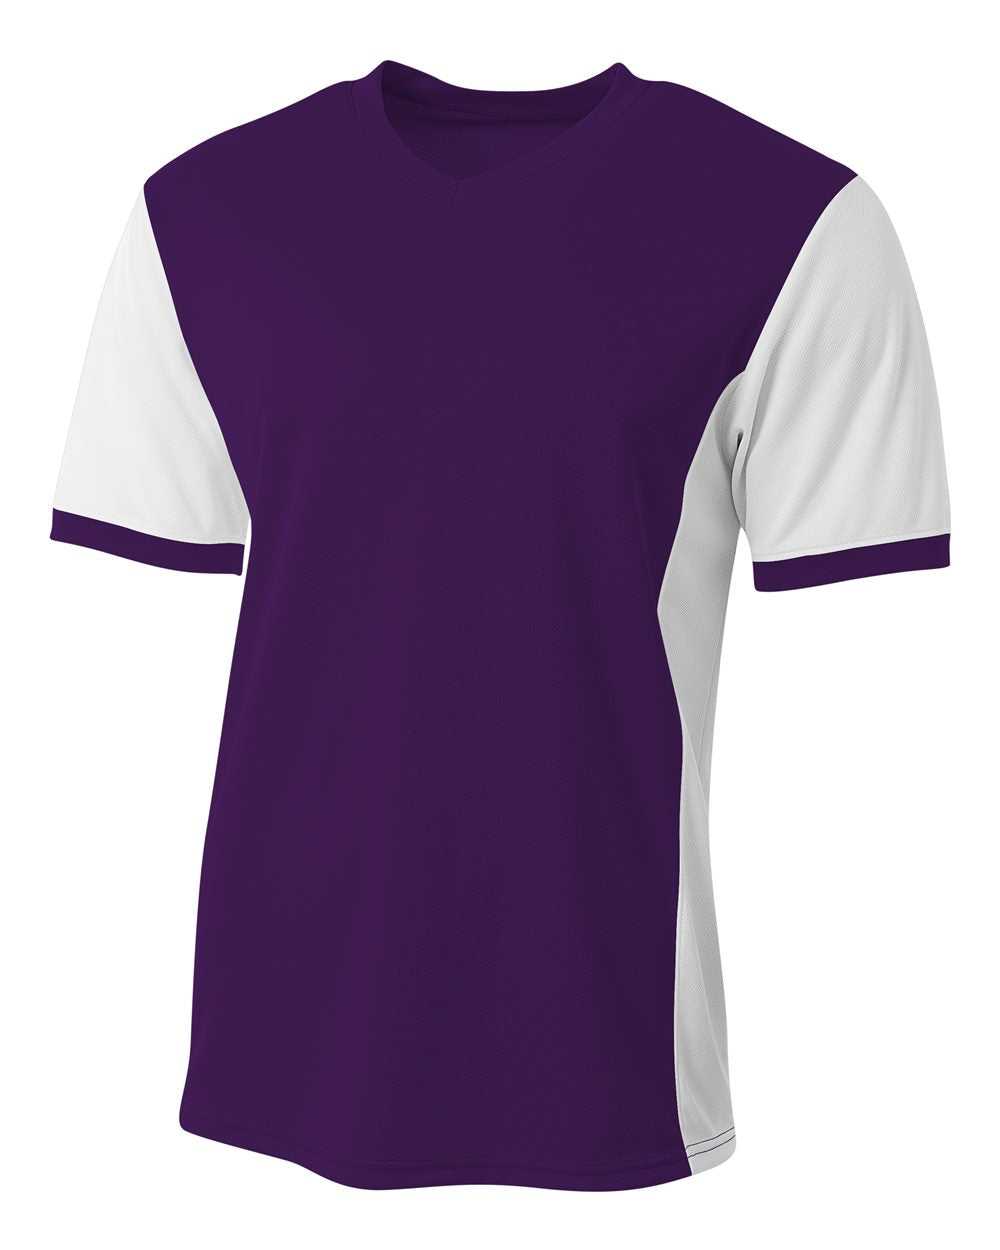 A4 NB3017 Premier Soccer Jersey - Purple White - HIT a Double